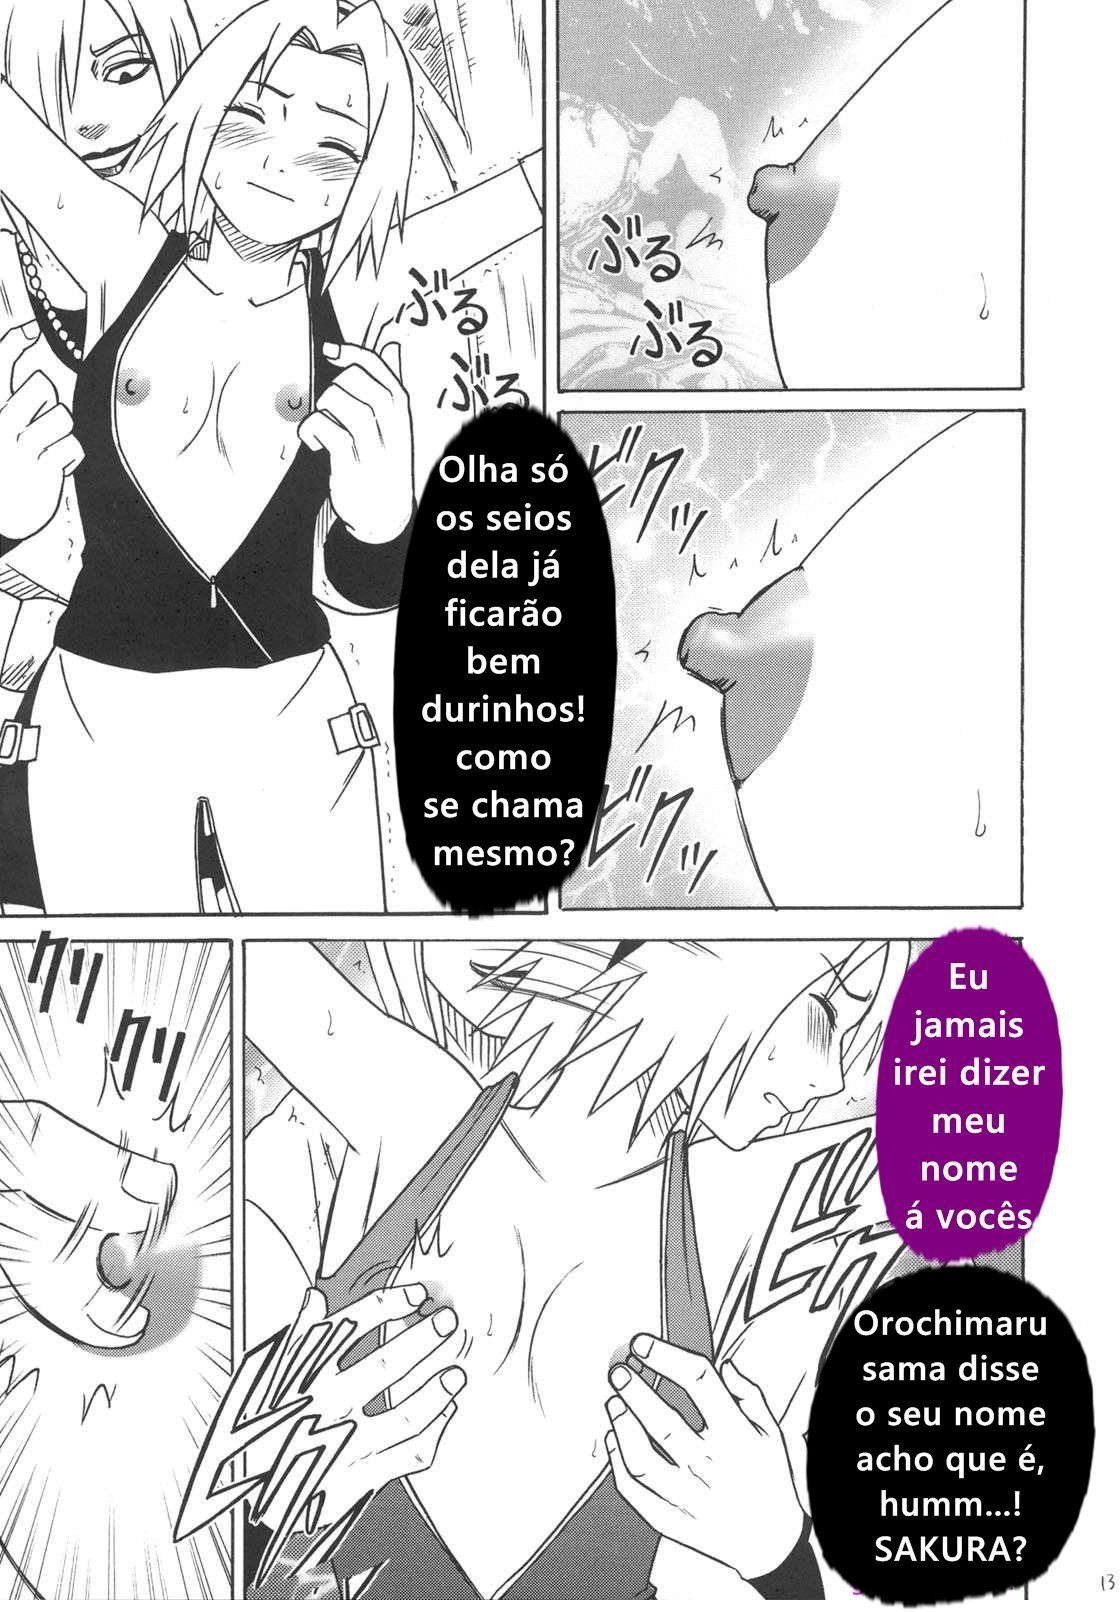 Hentaihome – Sakura na mão do inimigo – Naruto XXX (8)